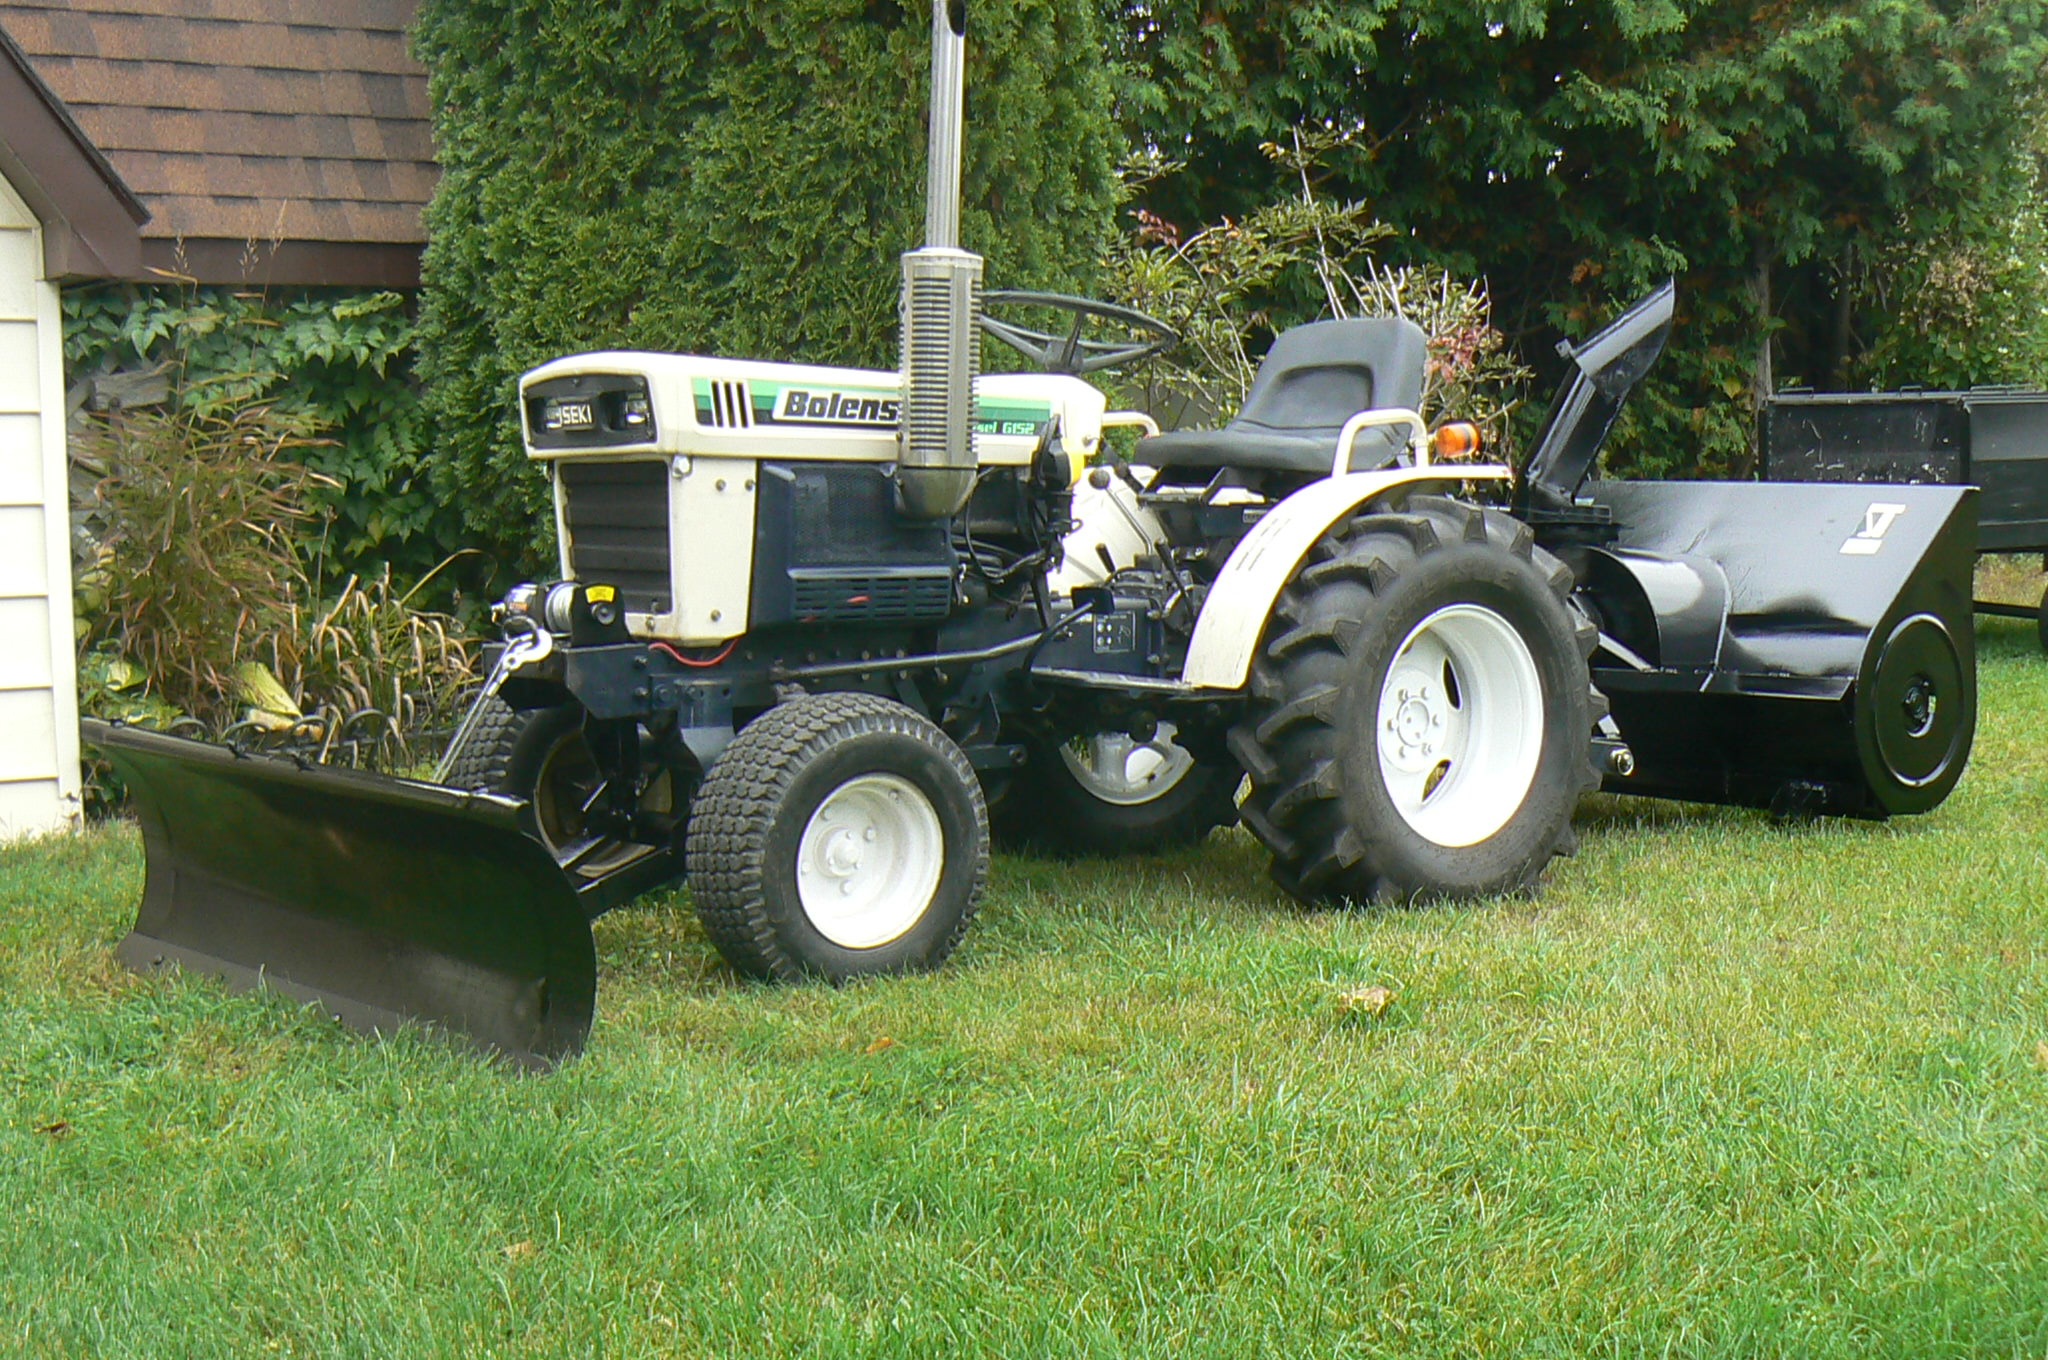 File:Bolens Garden Tractor.JPG - Wikimedia Commons